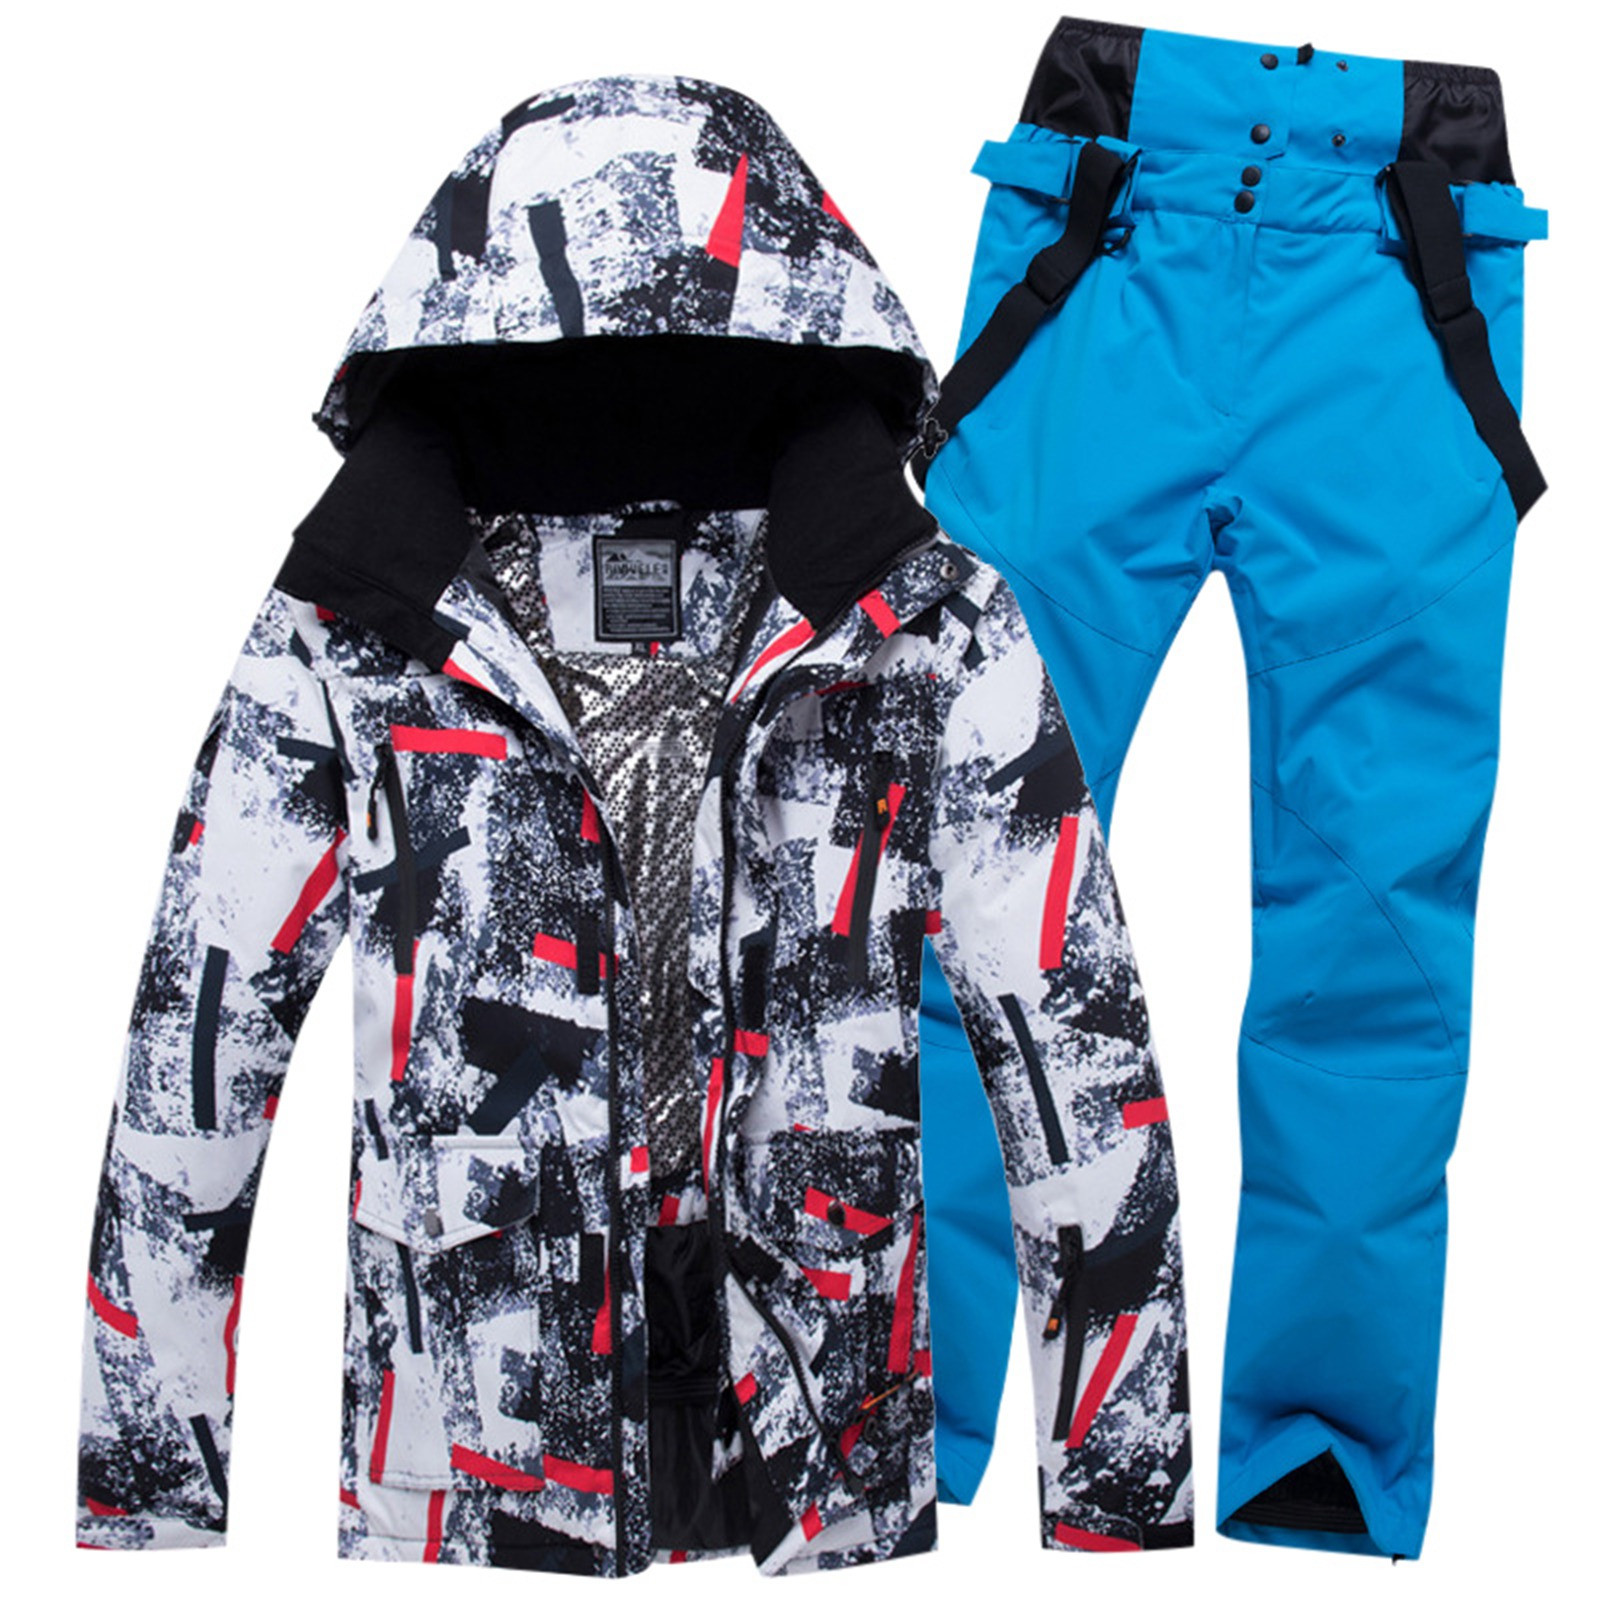 8QIDA Male Ski Jackets and Pants Set Windproof Insulated Snowsuit ...